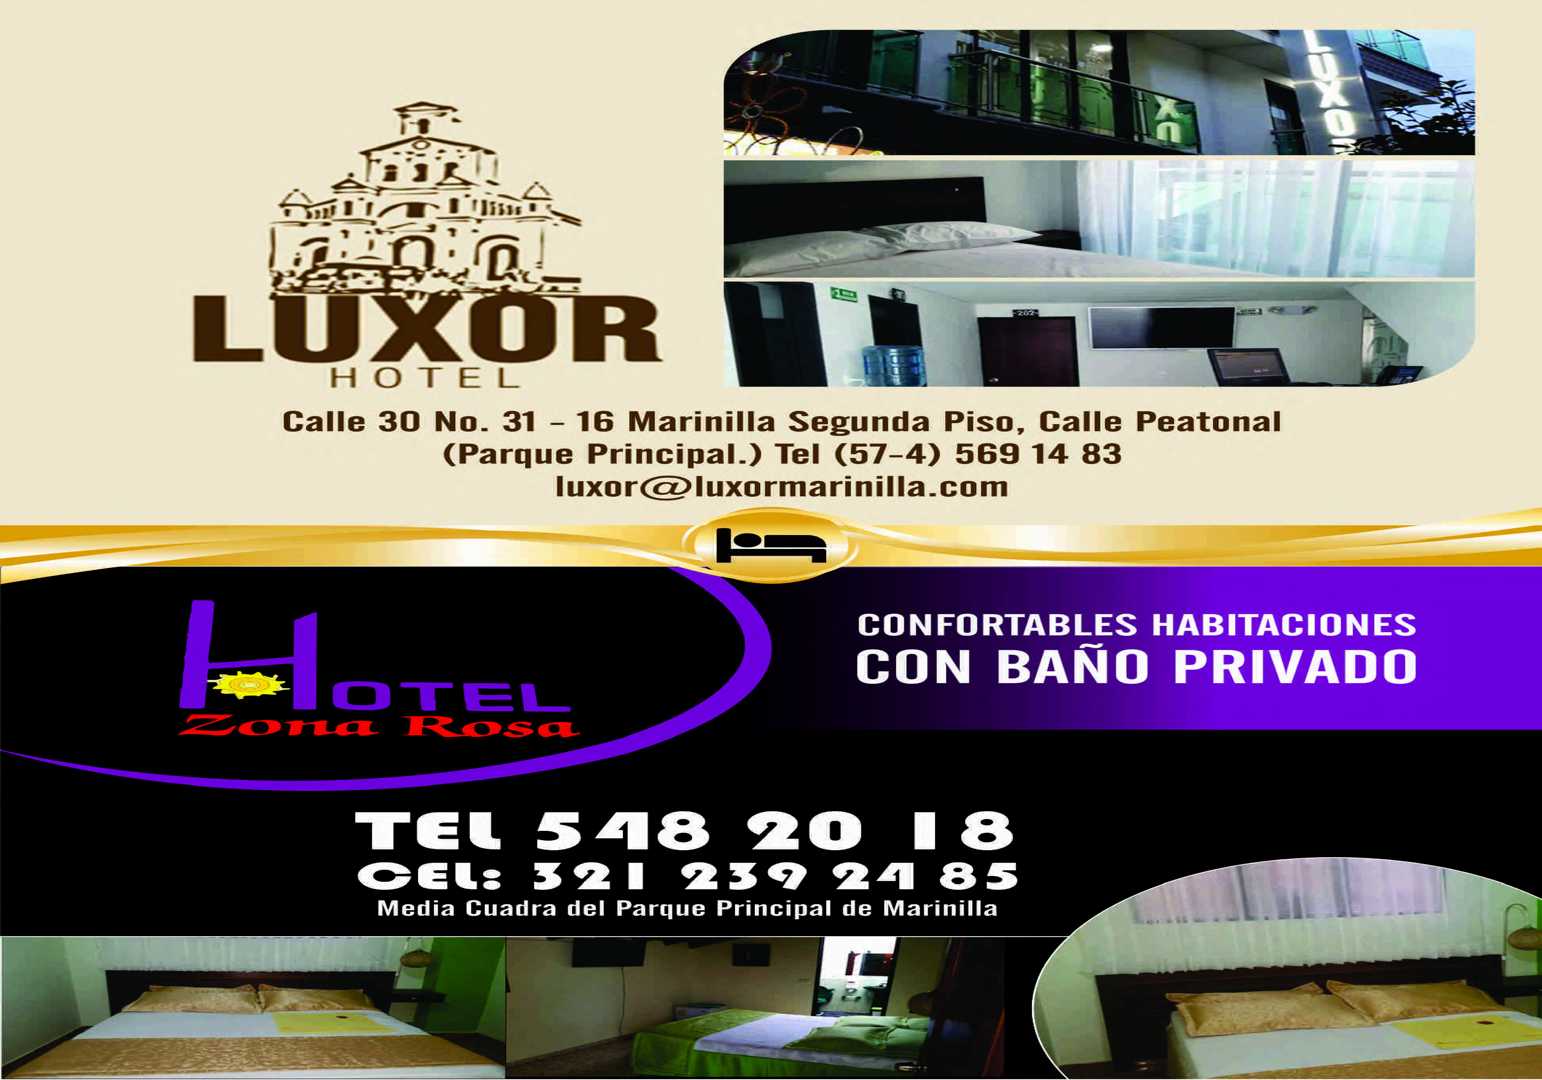 LUXOR Hotel - Marinilla Antioquia